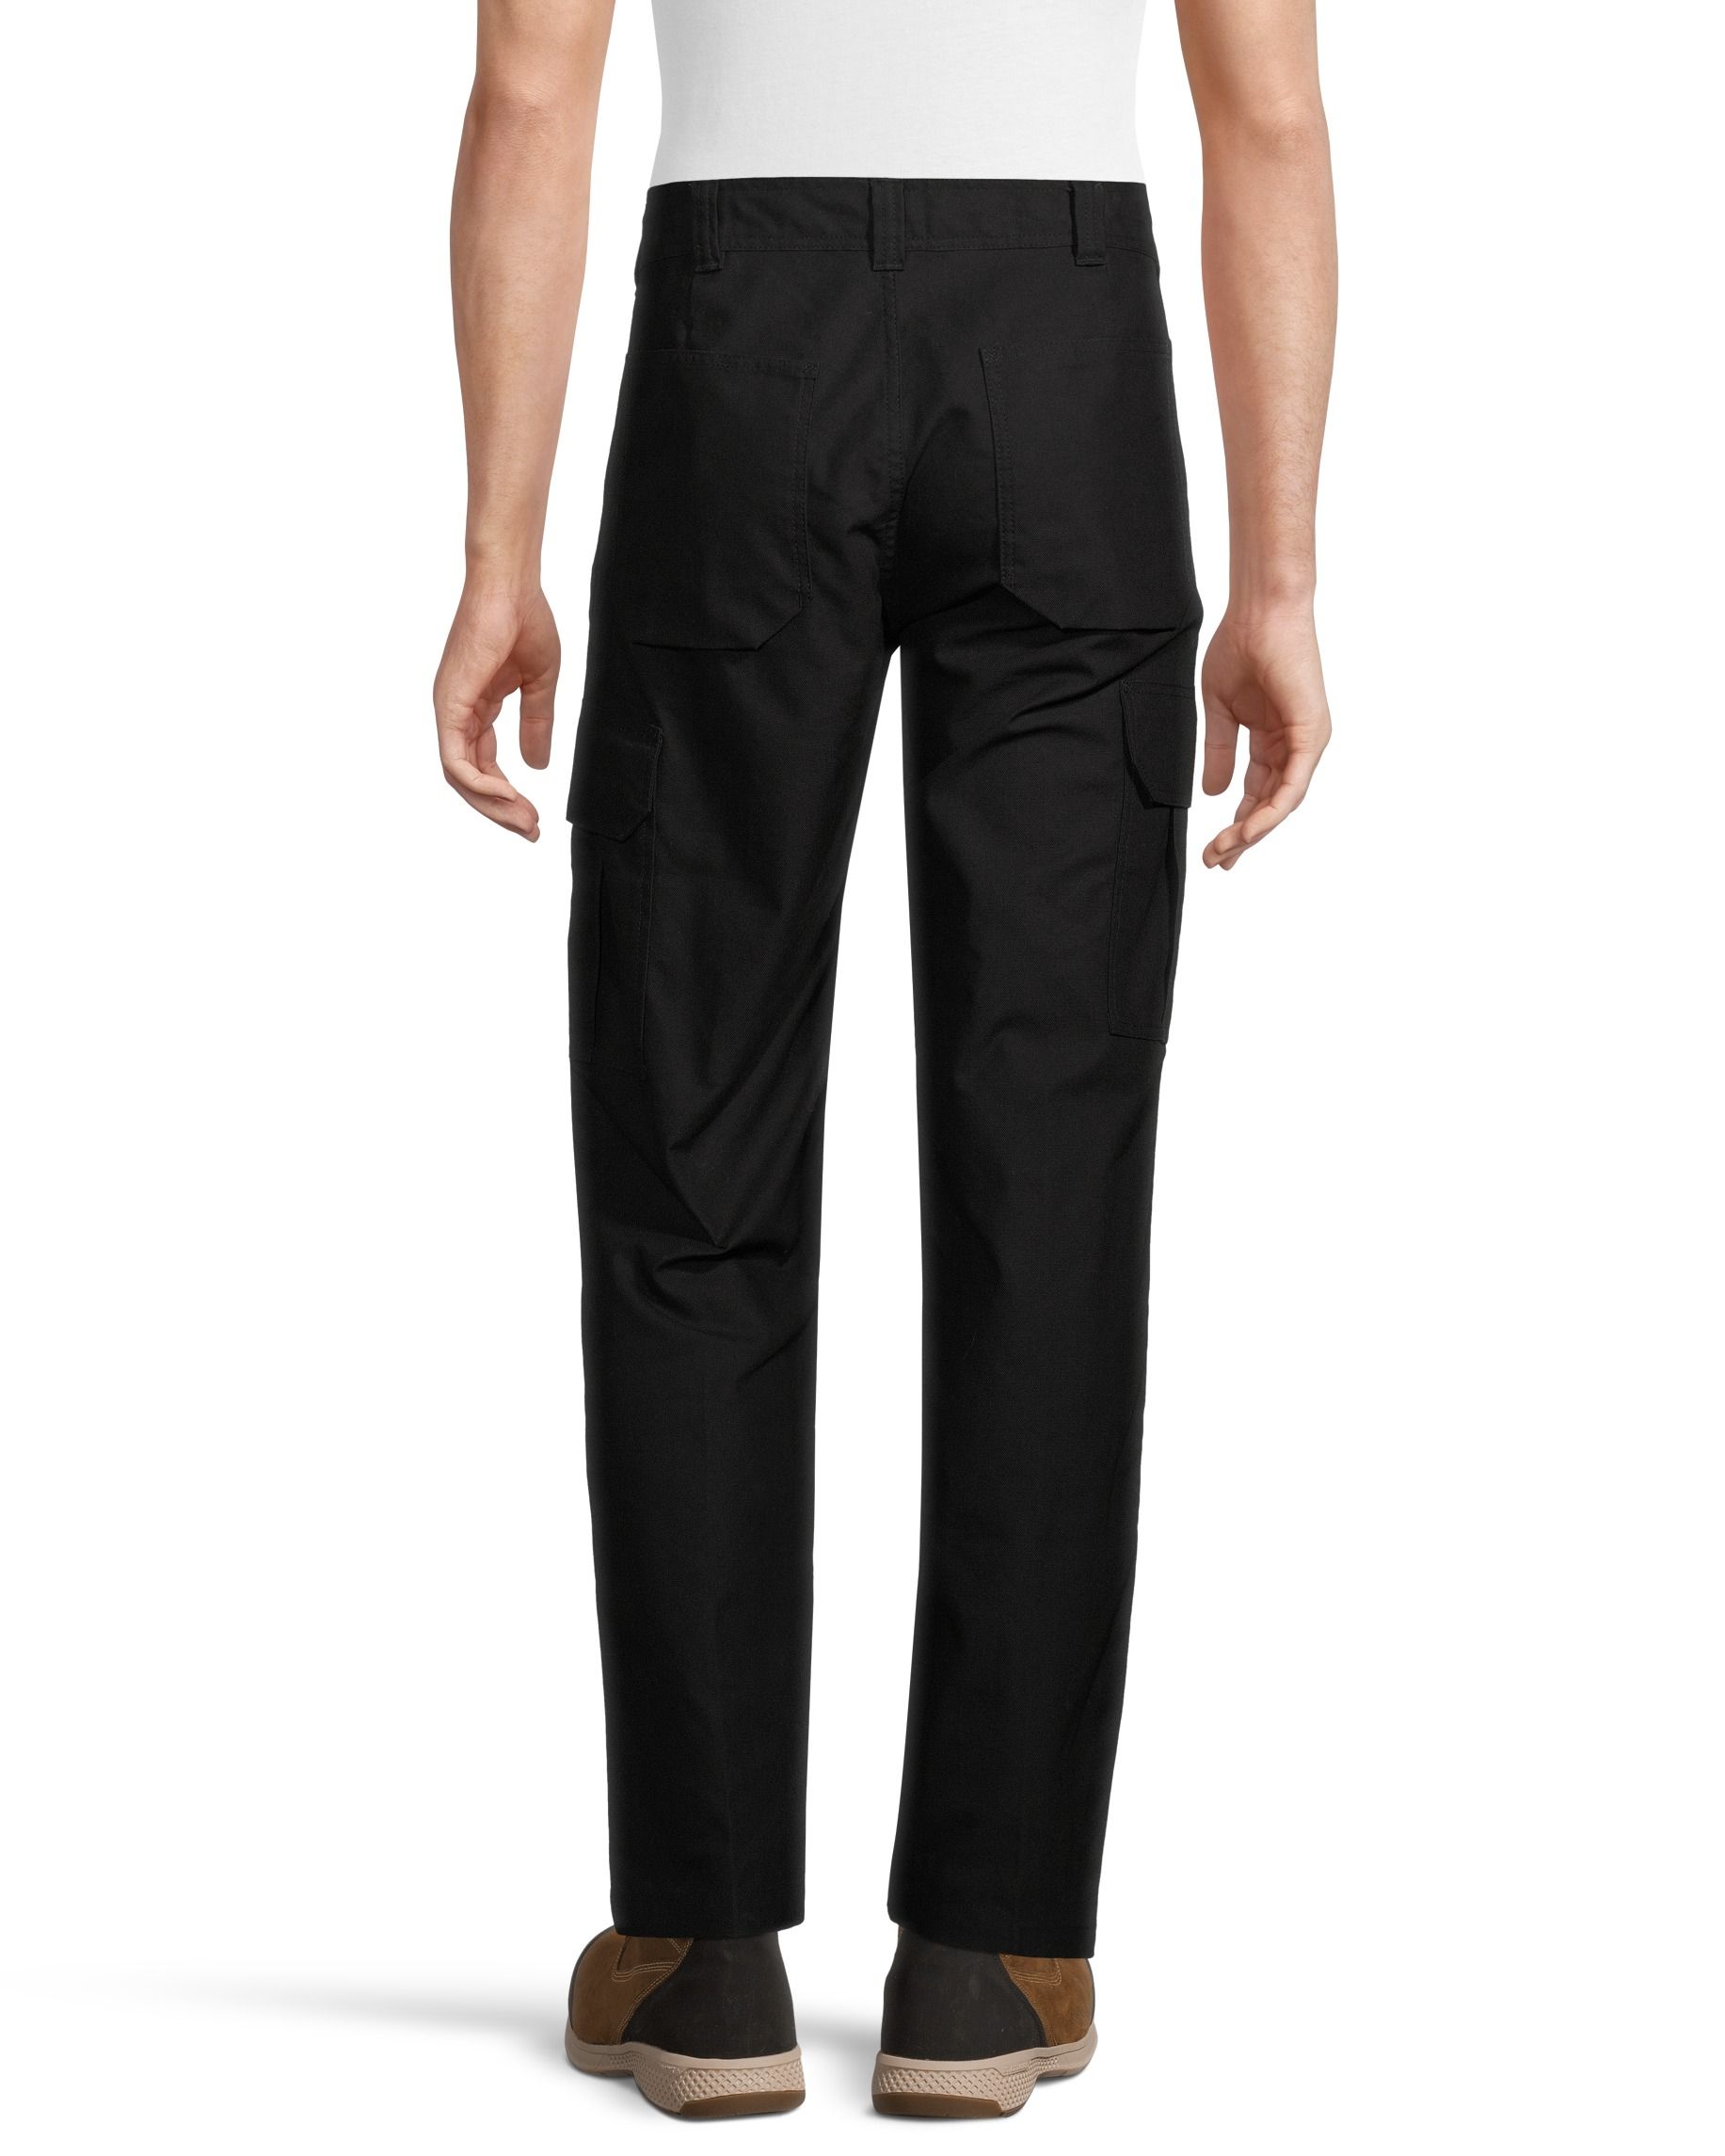 Helly Hansen Workwear Men's Slim Fit Cargo Work Pants